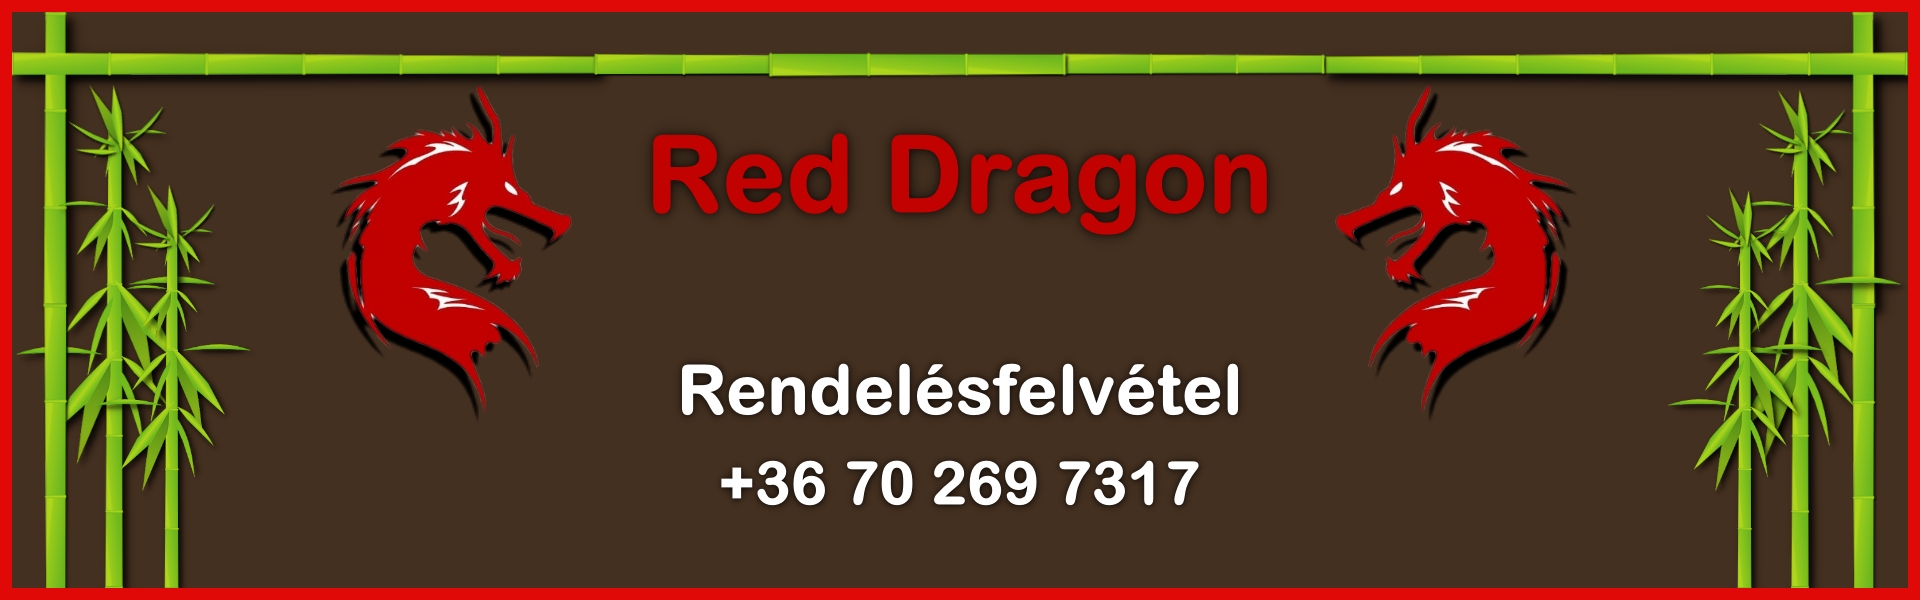 RedDragon_header_1920x600.jpg